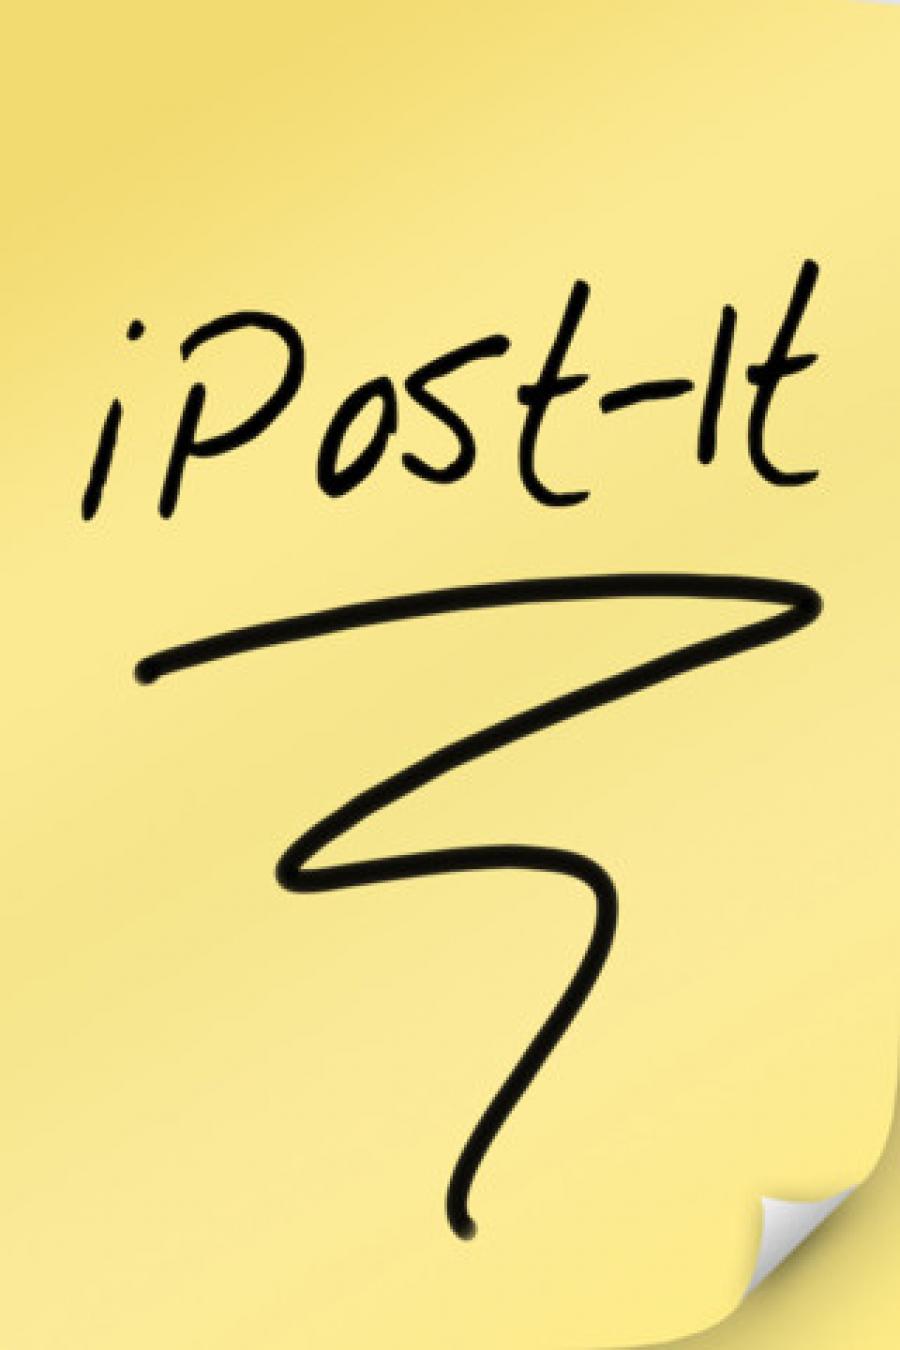 iPost-It